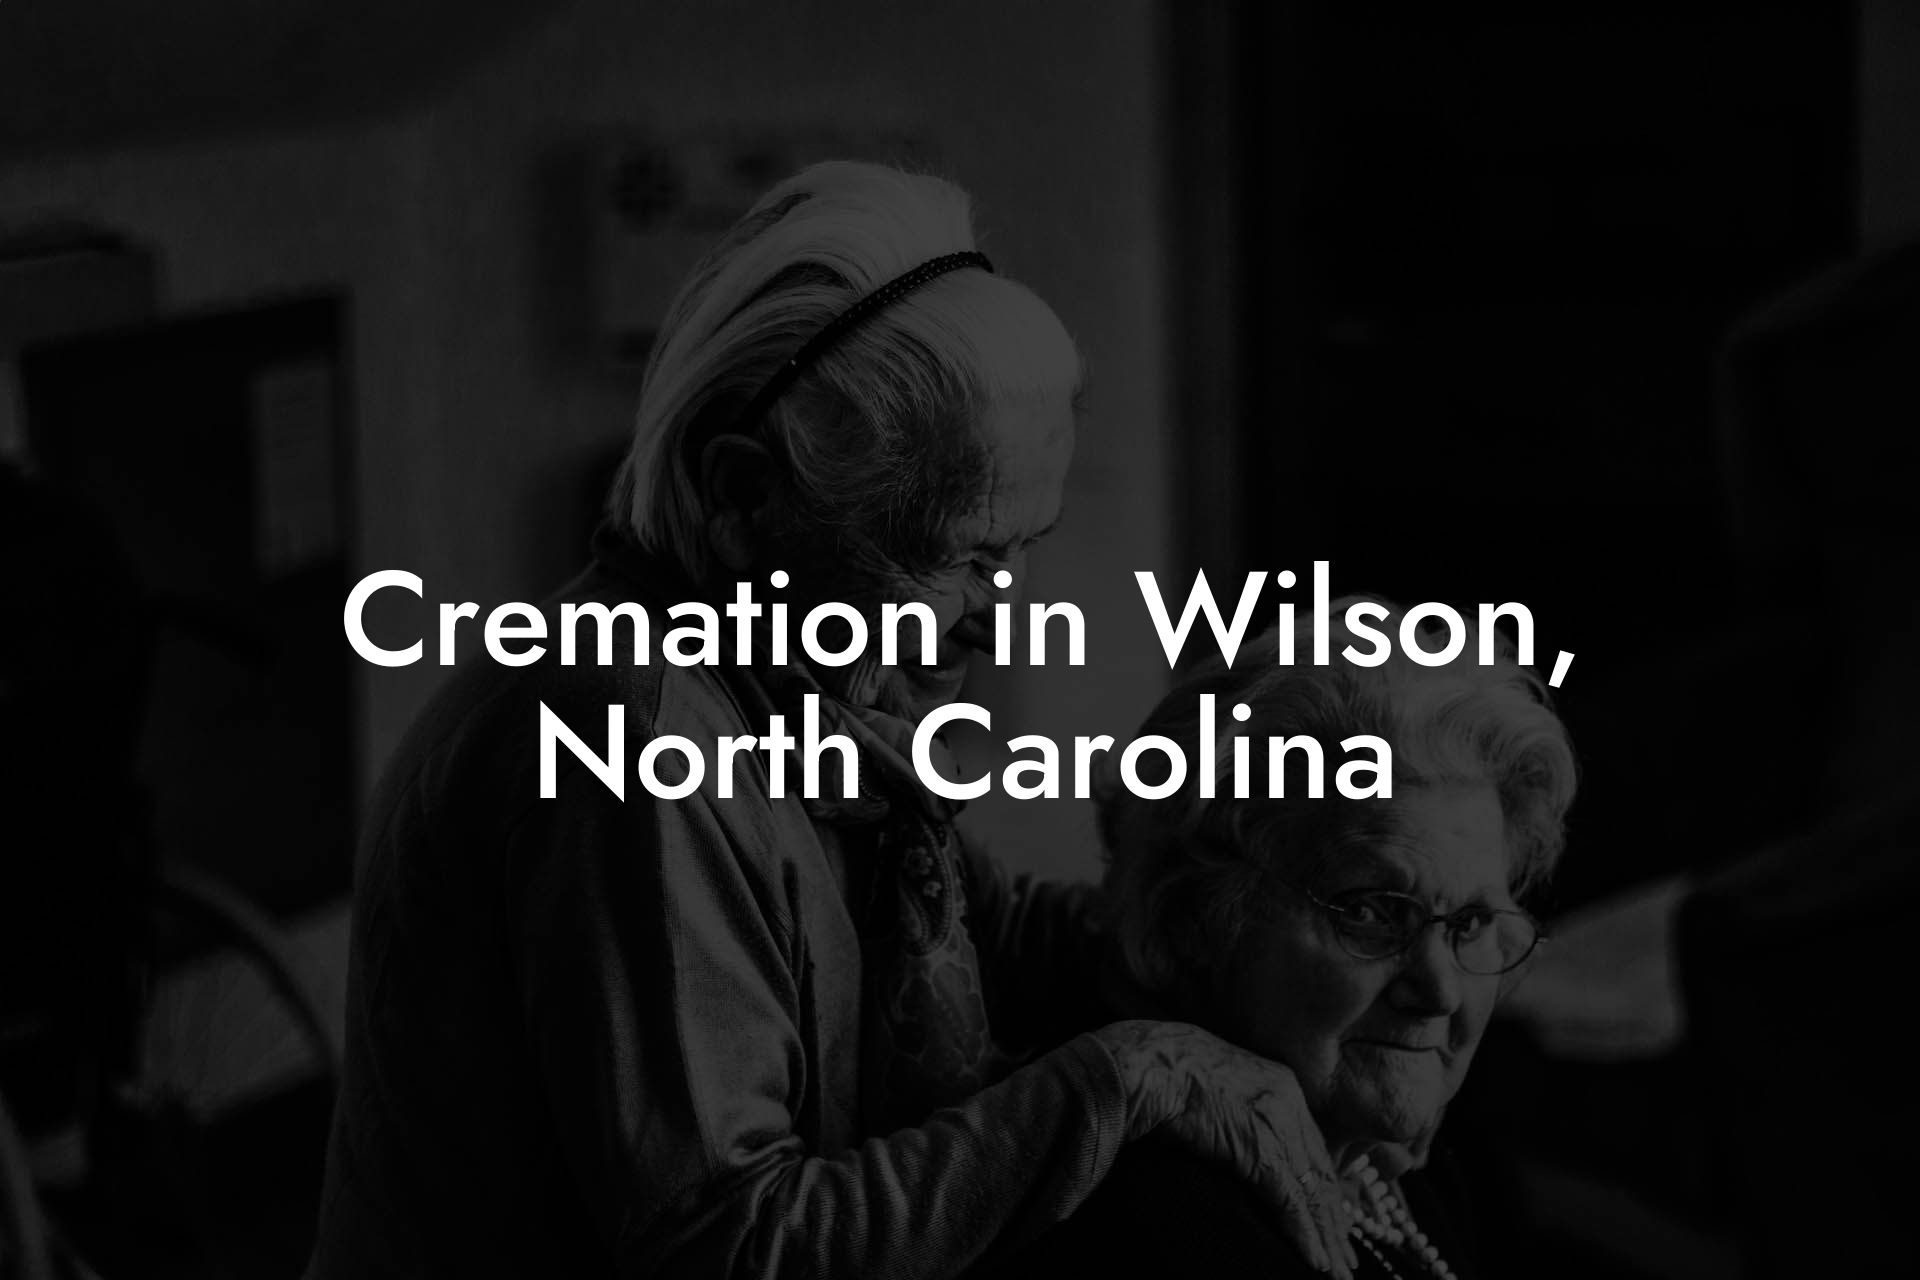 Cremation in Wilson, North Carolina